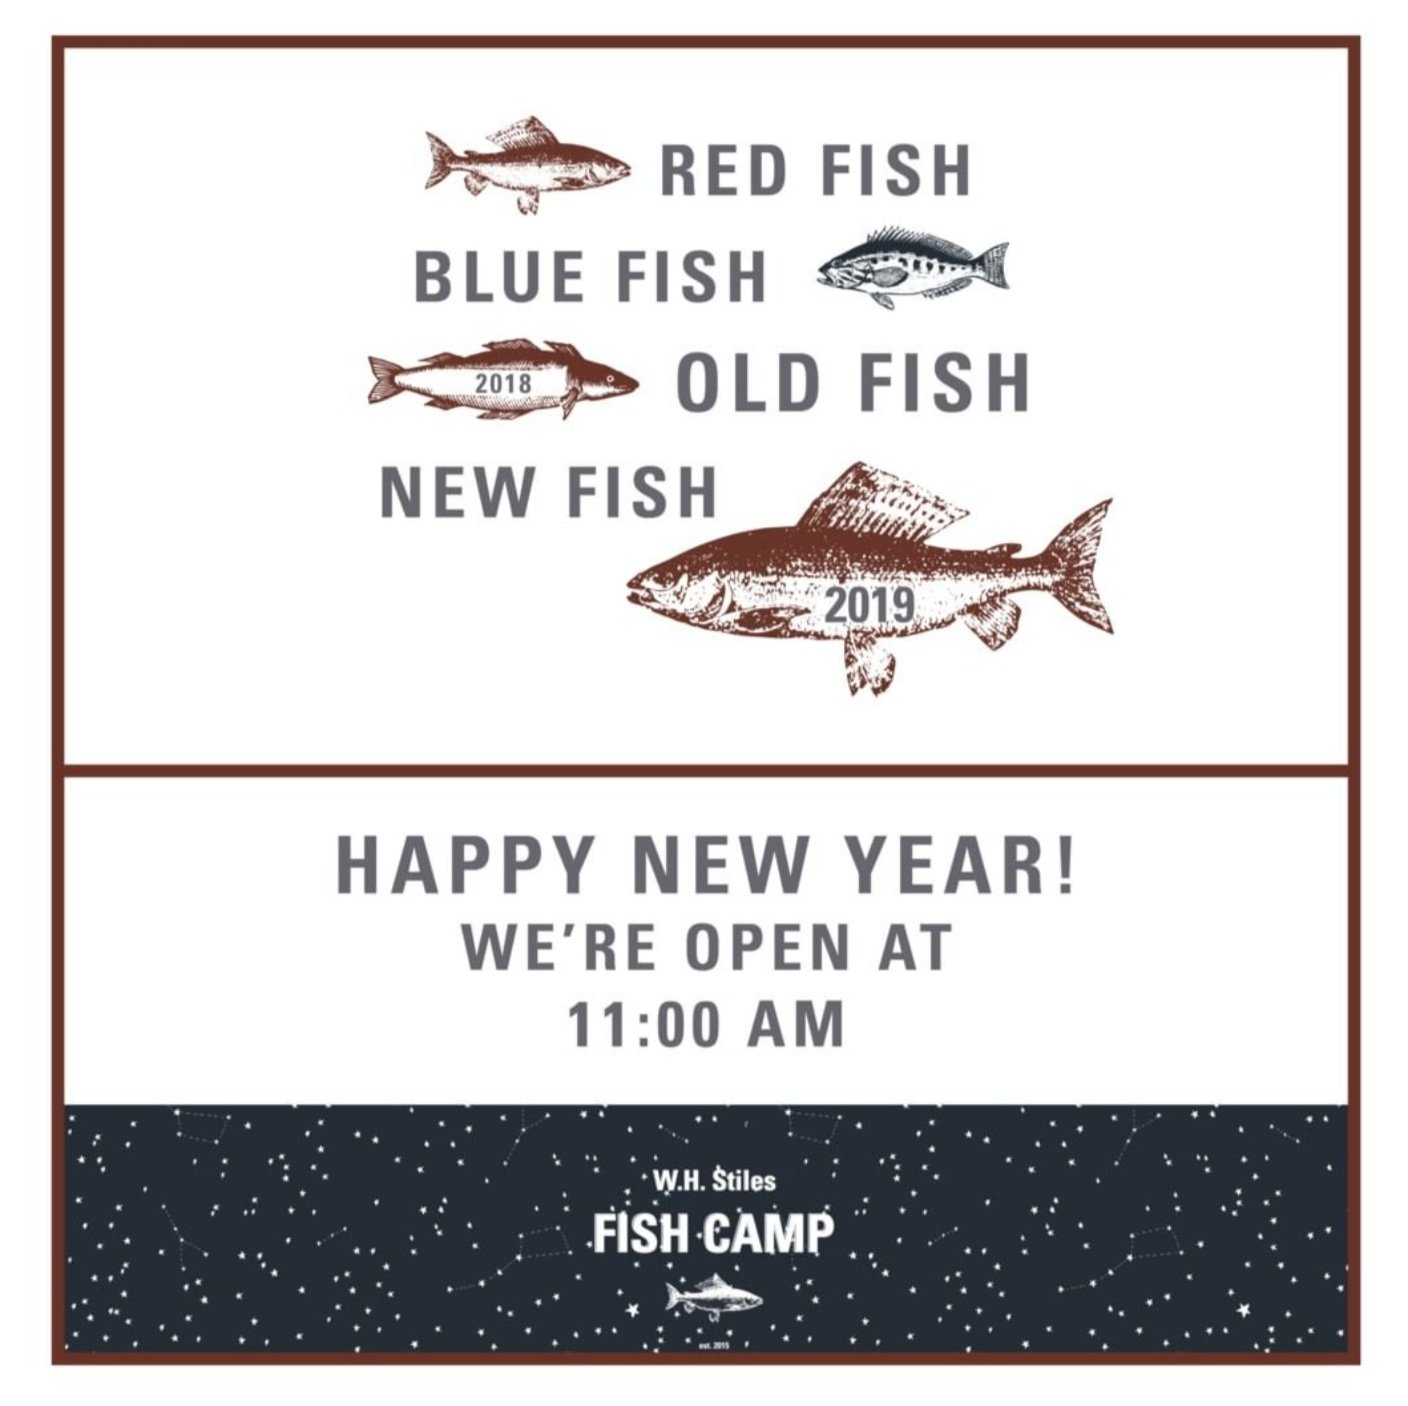 Treebird+Branding+-+WH+Stiles+Fish+Camp+-+Red+fish+Blue+fish.jpg